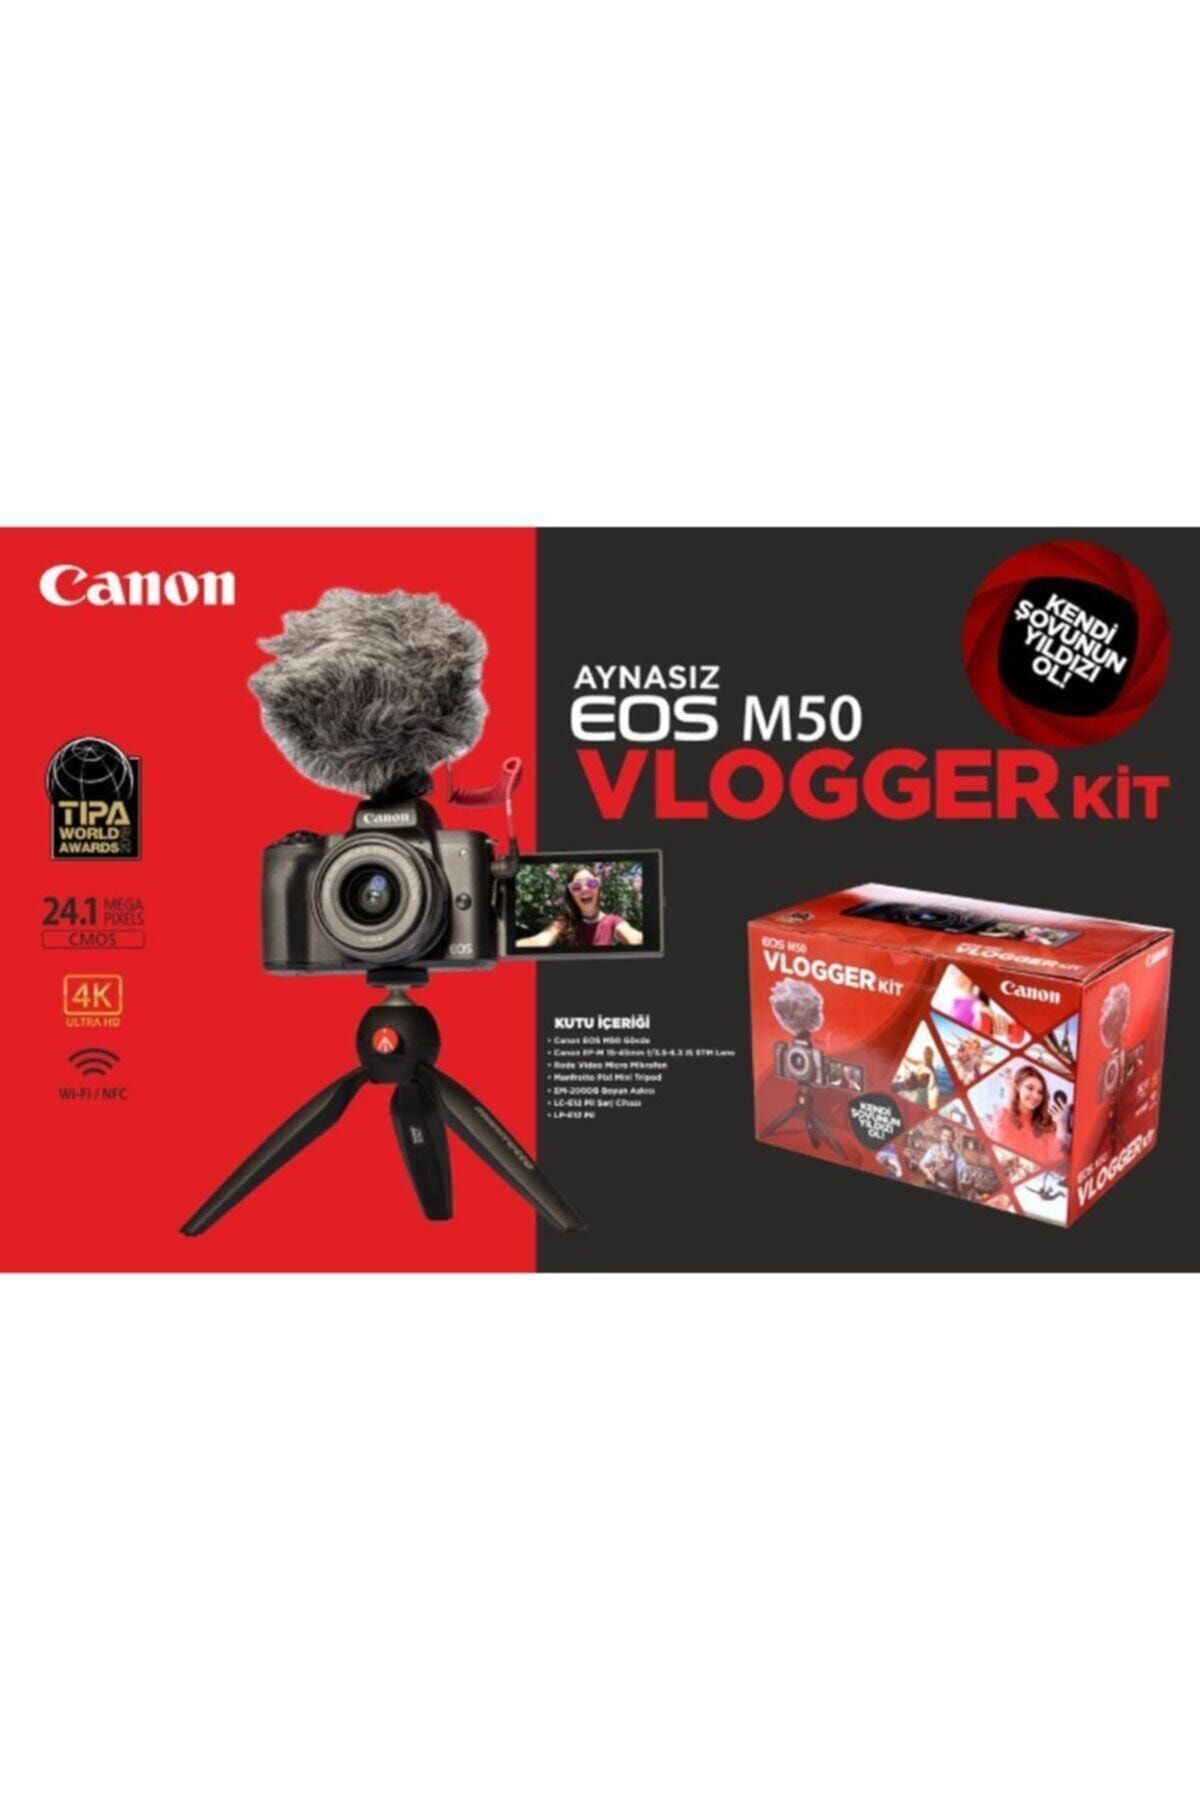 Canon Eos M50 Vlogger Kit